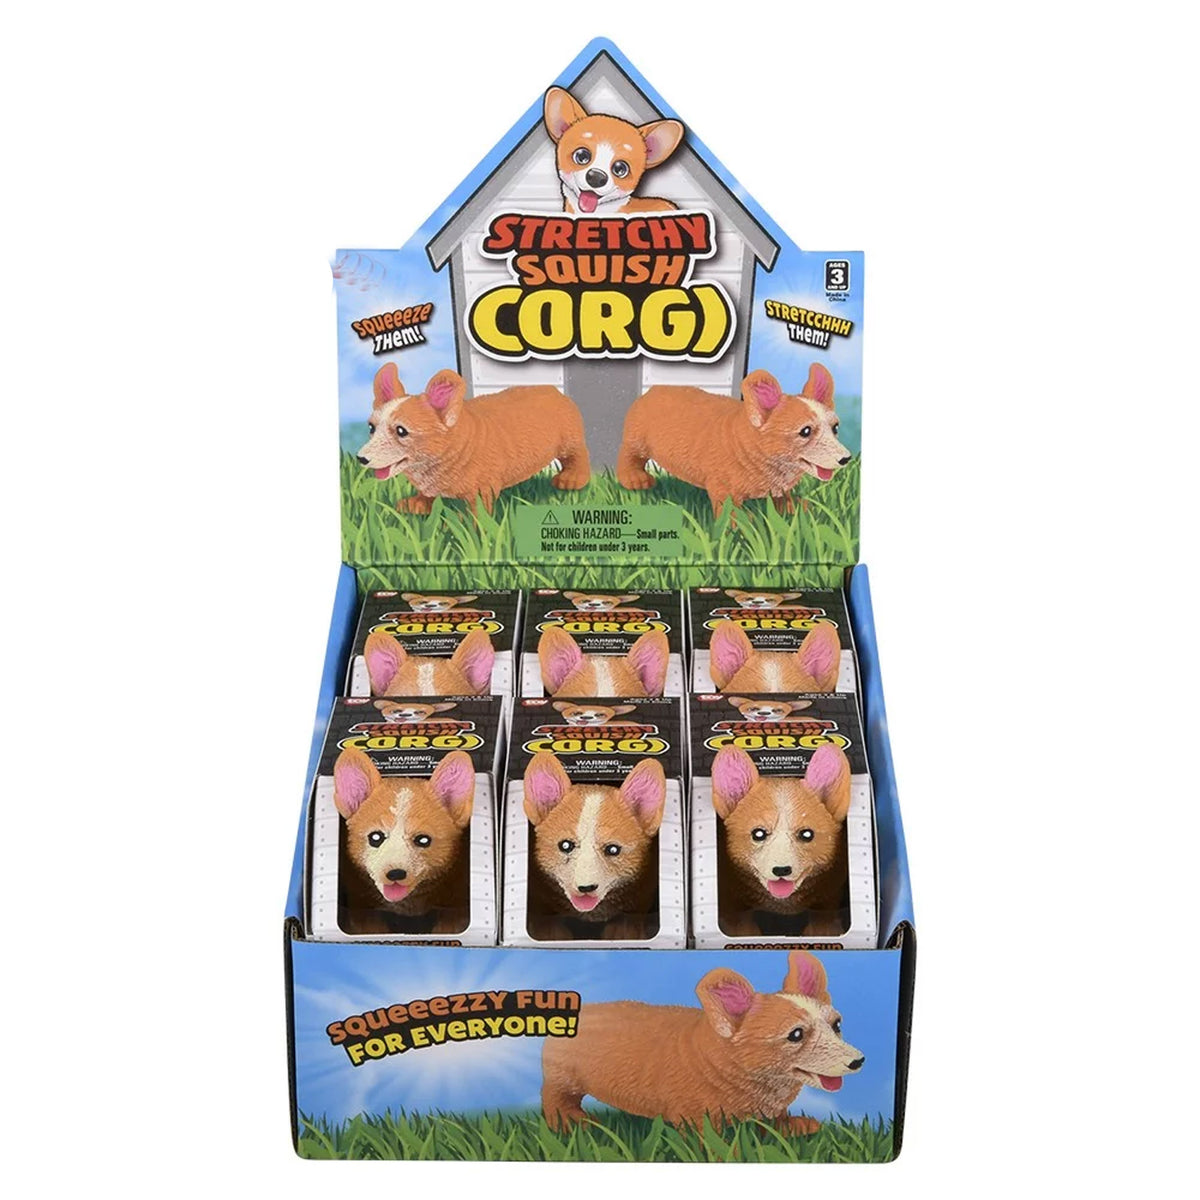 Corgi Animal Stretchy & Squishy Toys For Kids In Bulk